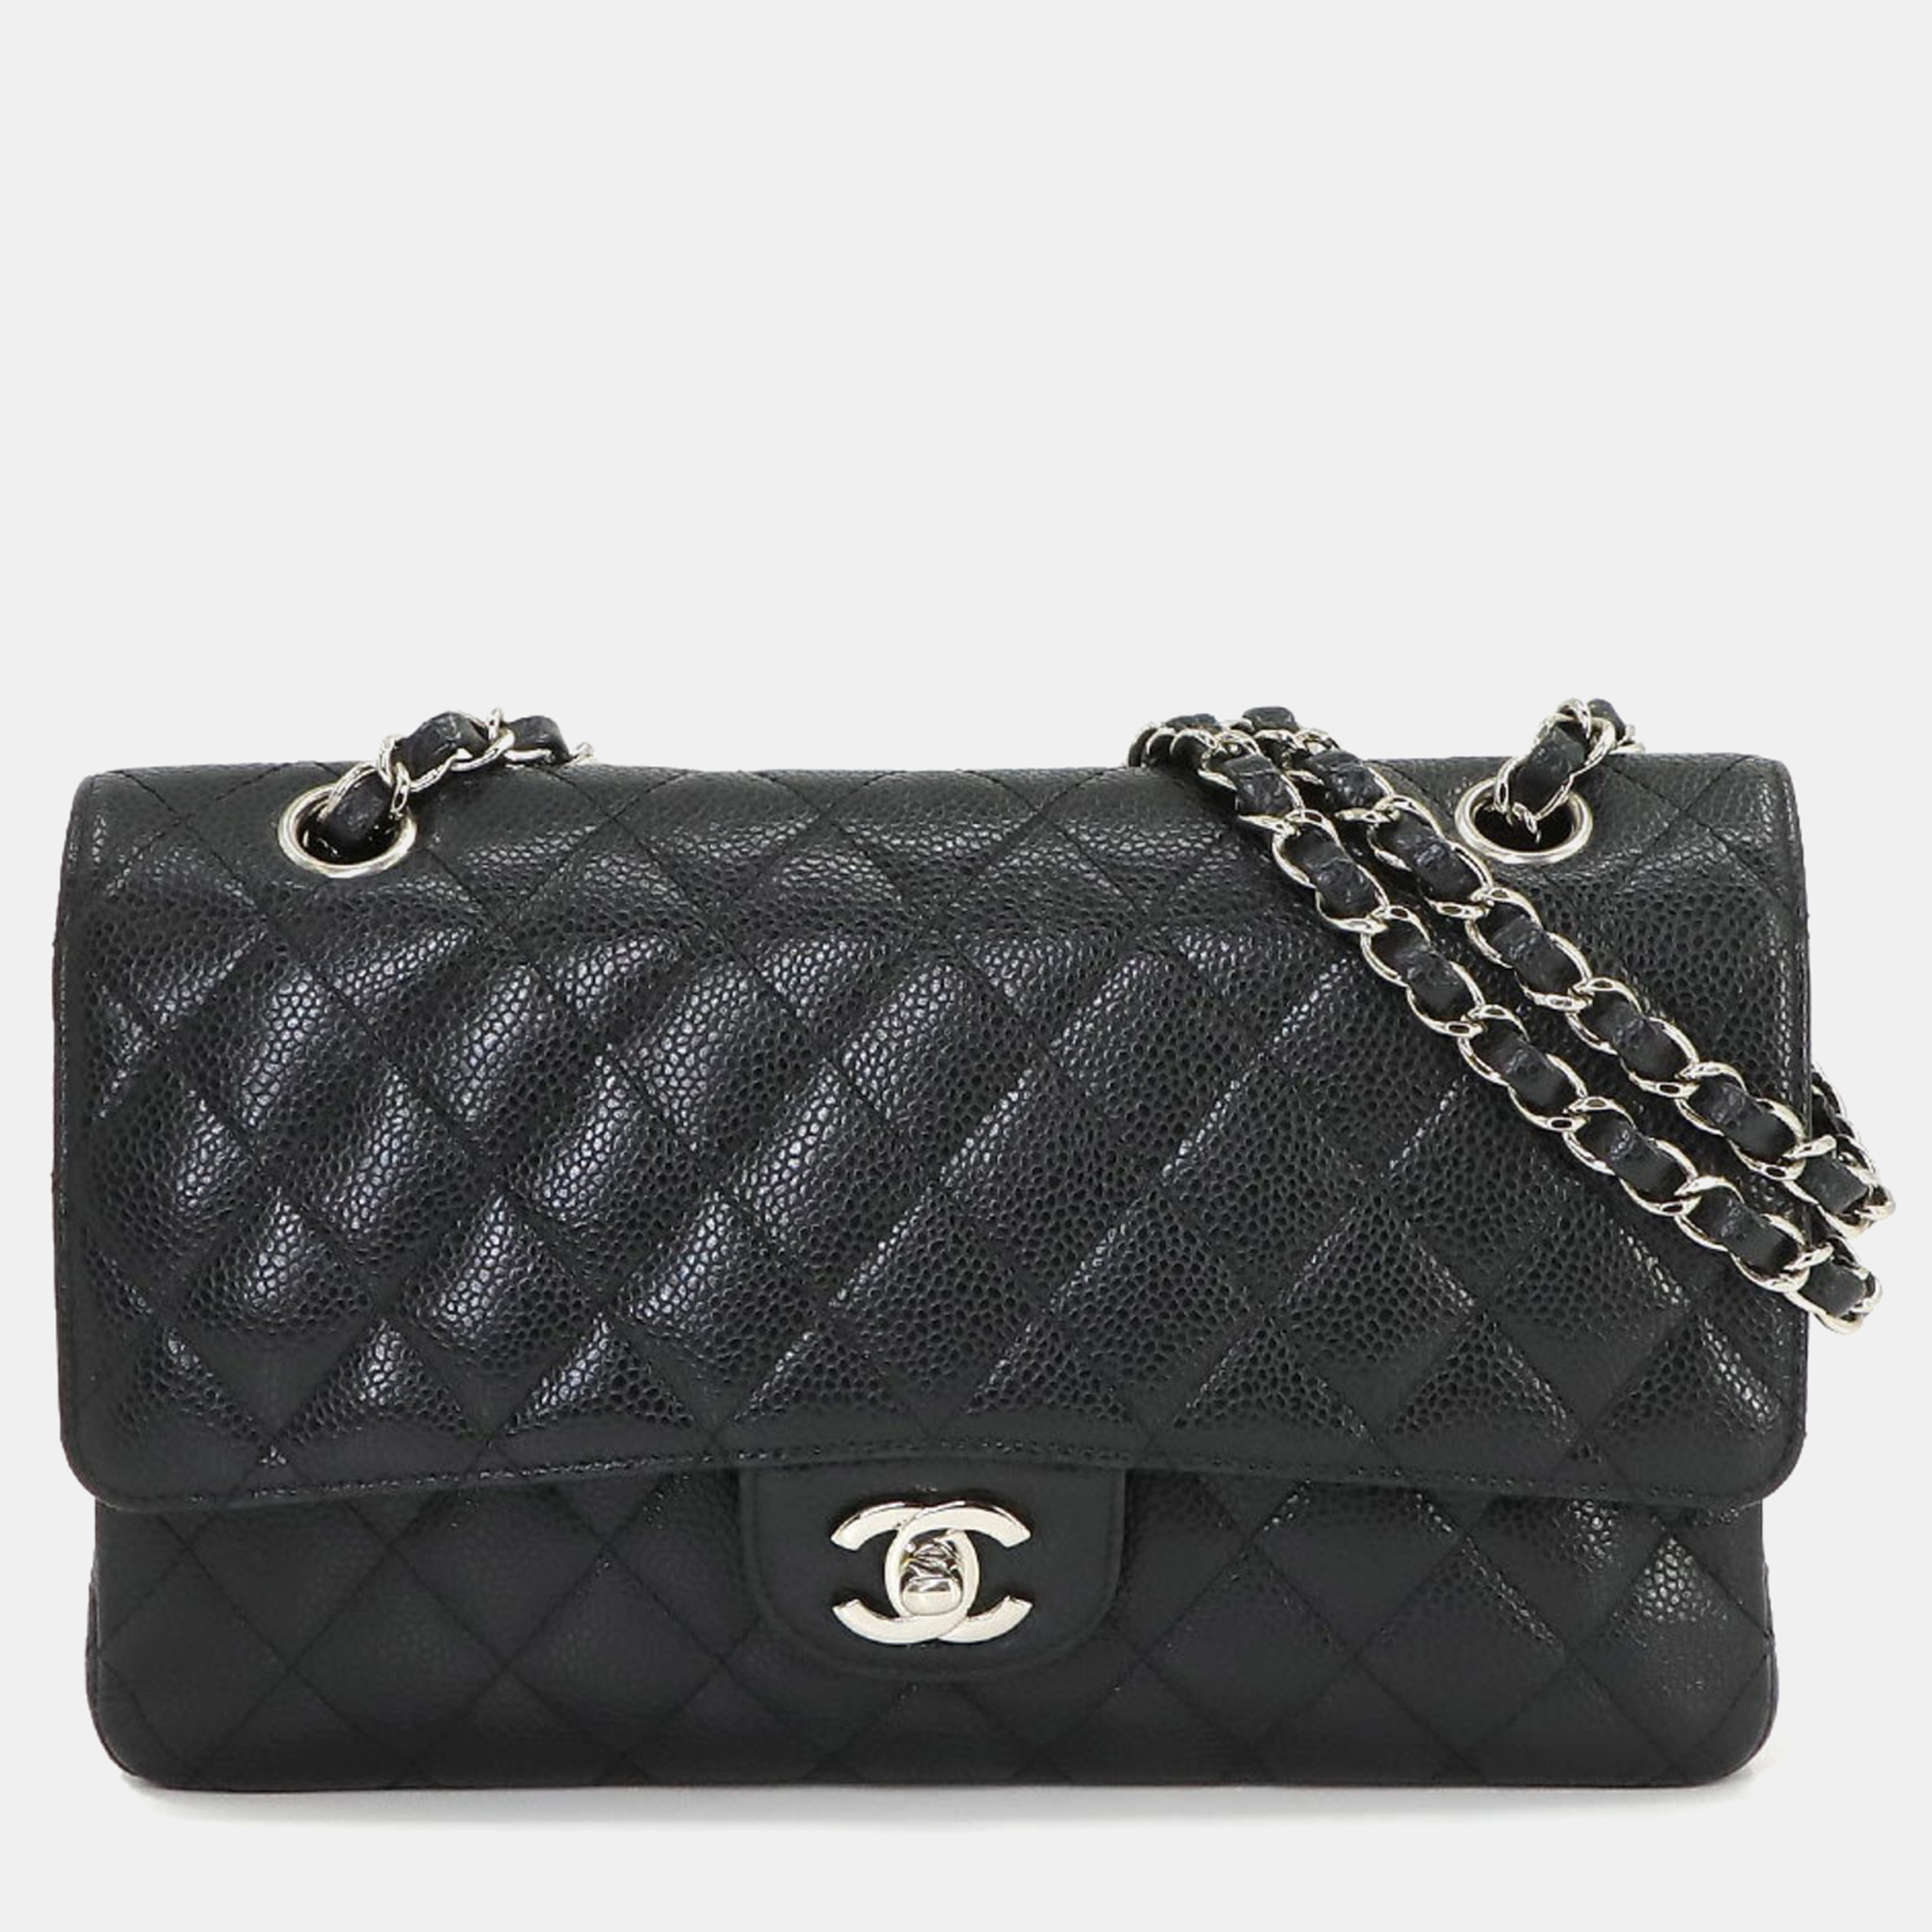 Chanel black caviar leather medium classic double flap shoulder bags